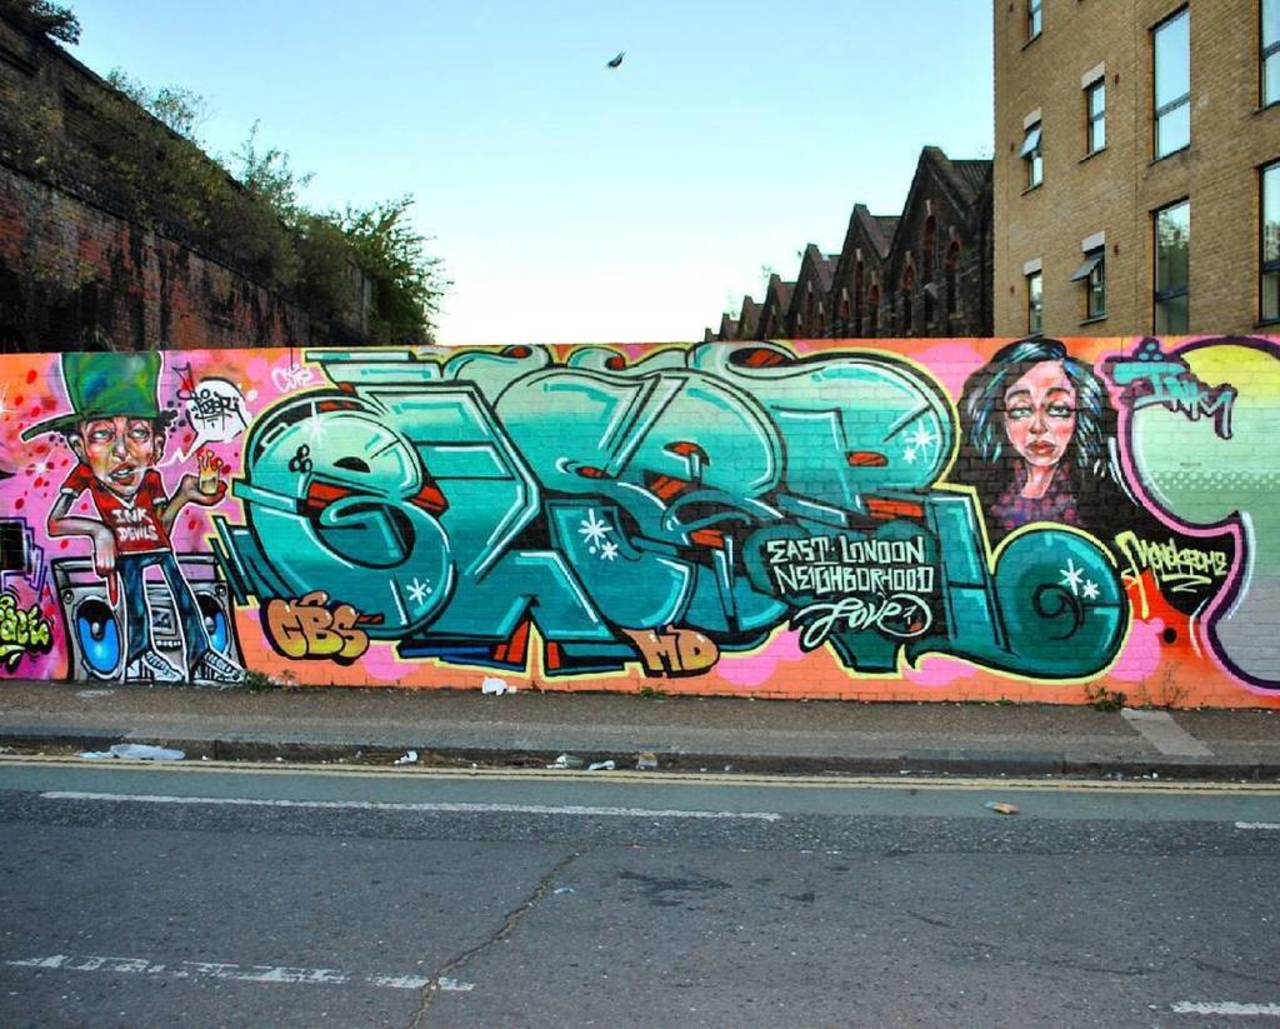 Graffiti art  
#Graffiti #StreetArt #UrbanArt #WhoDidThis #TizerID #BraithwaiteStreet #Shoreditch #London #Nikon #… http://t.co/xeUumSDEAF